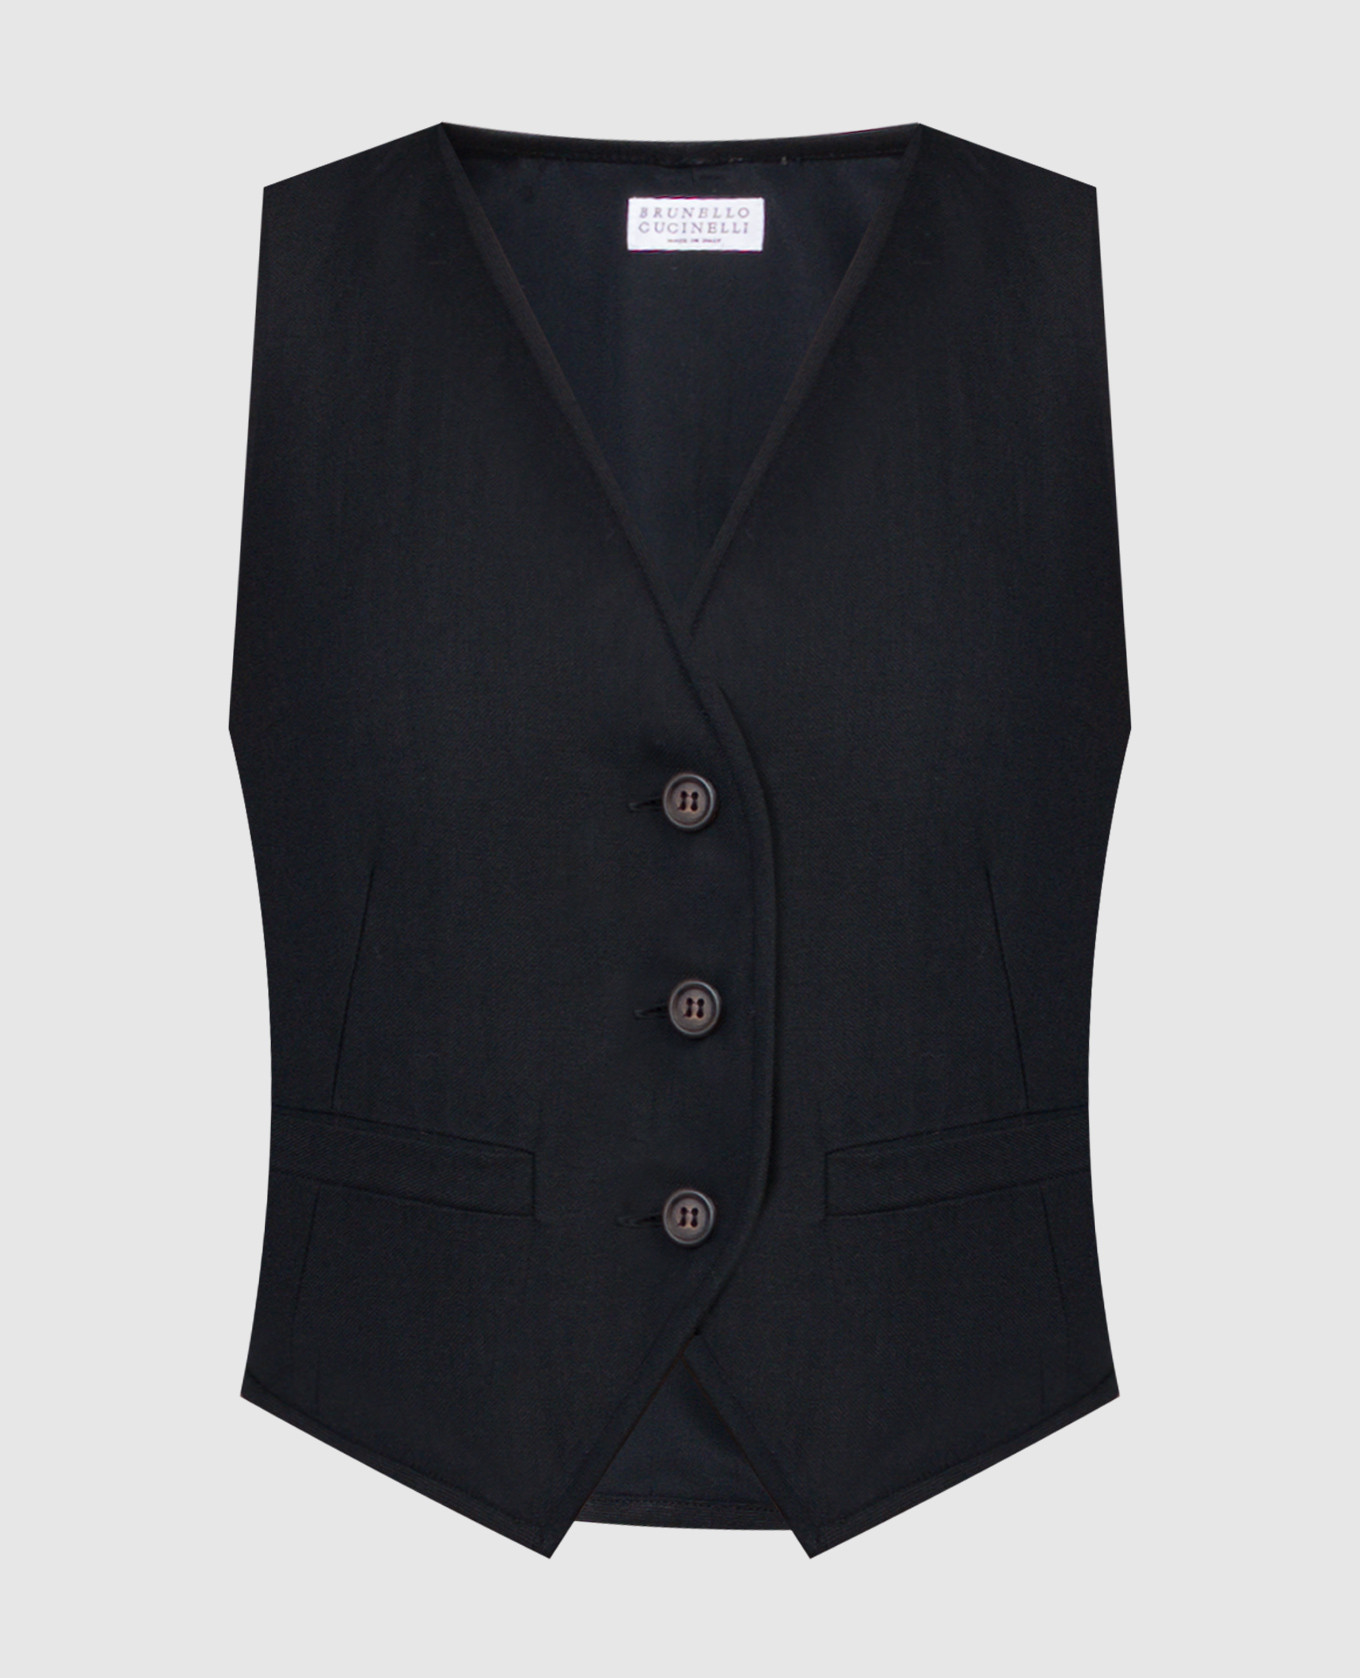 Black linen waistcoat with monil chain